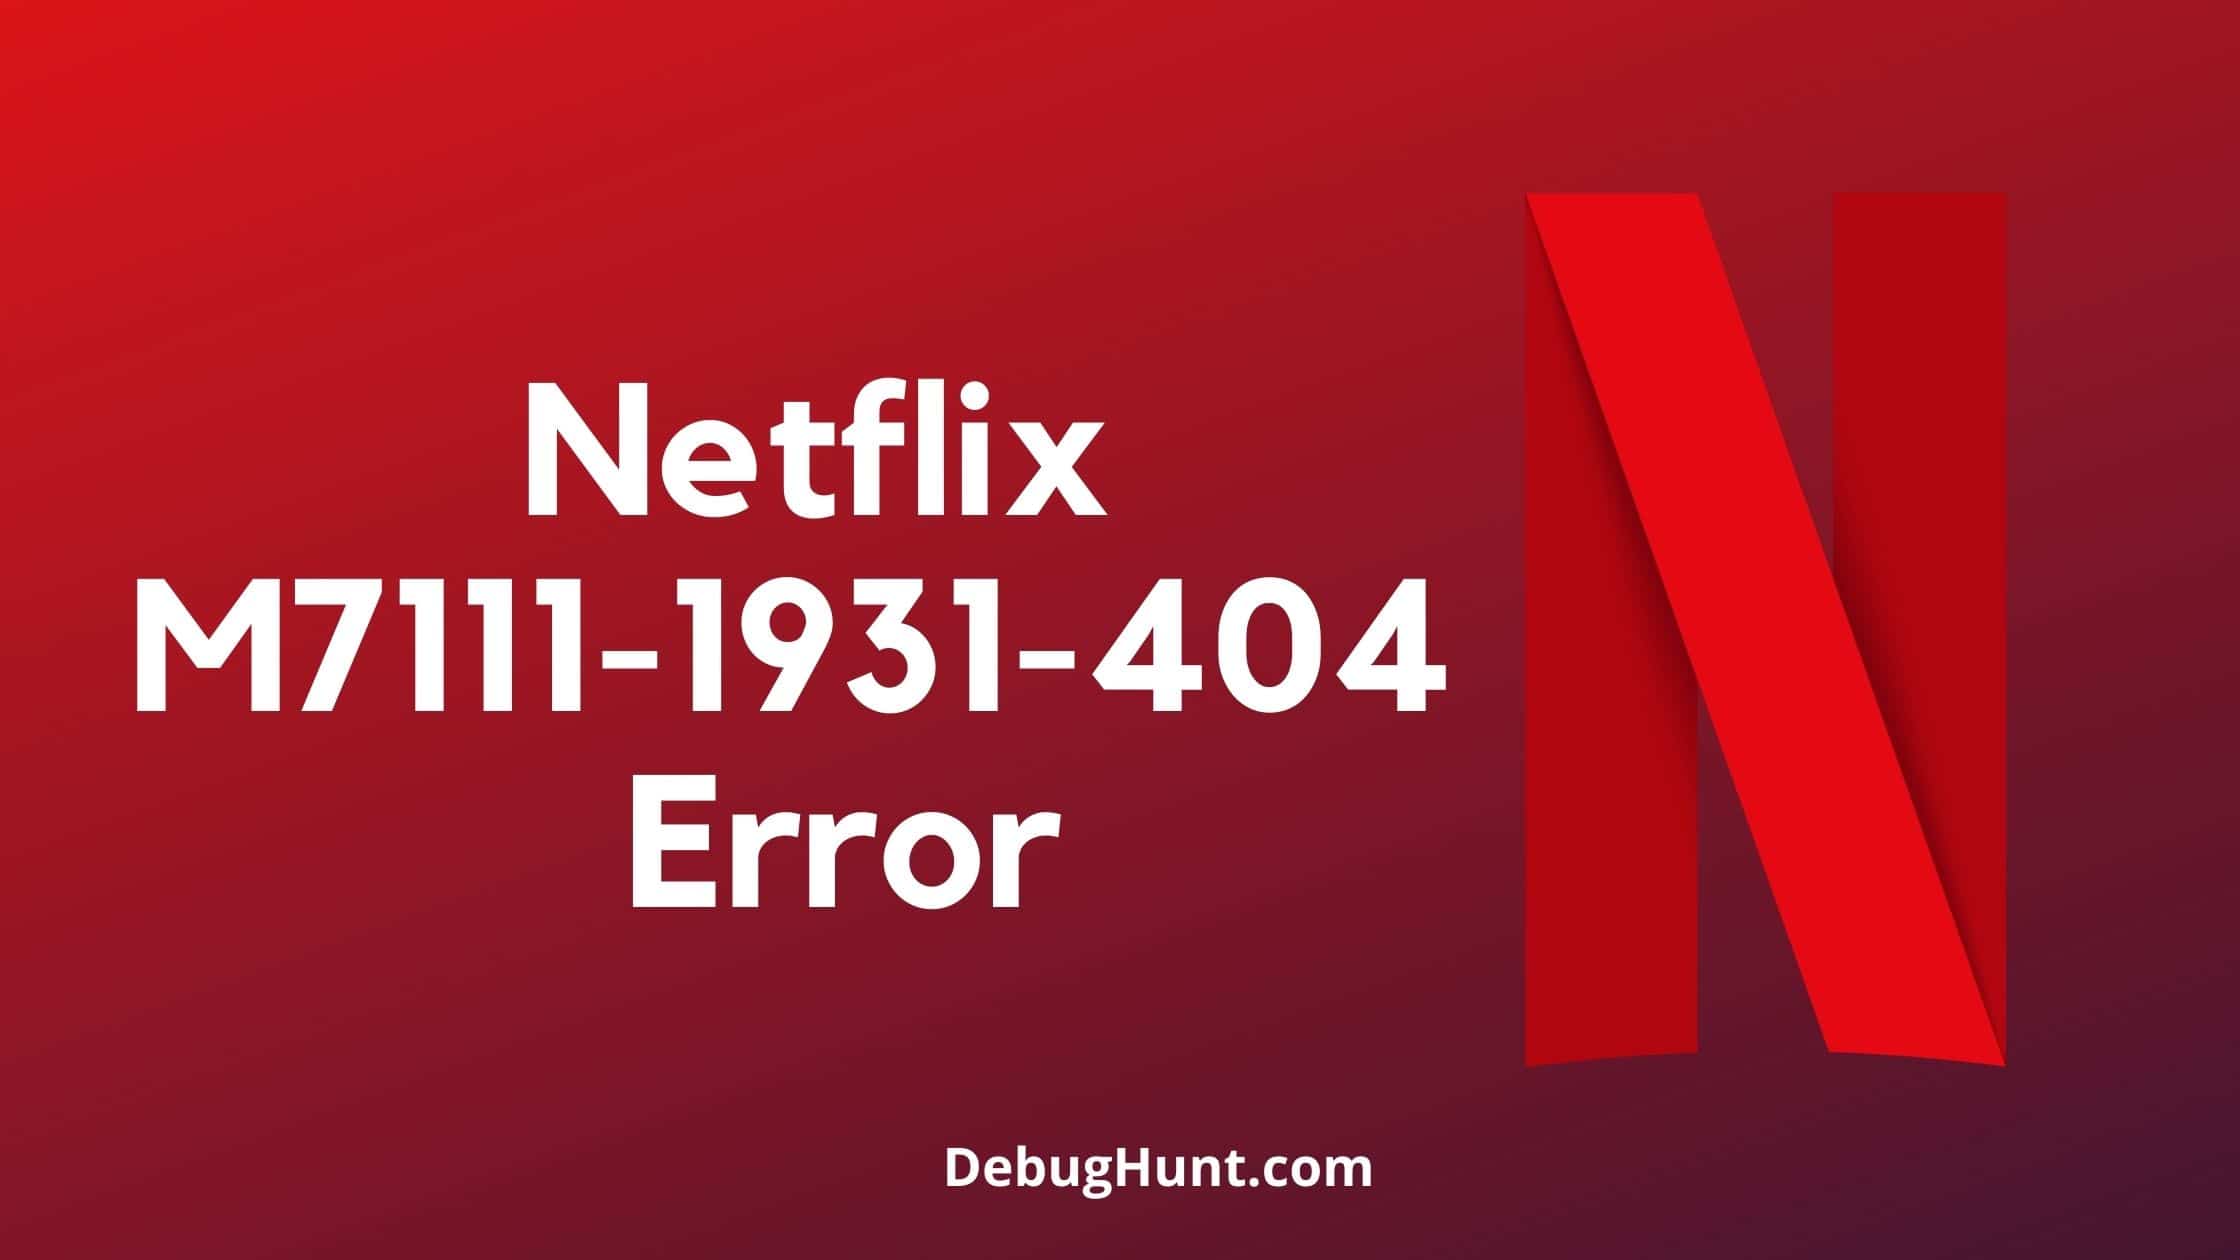 Netflix M7111 1931 404